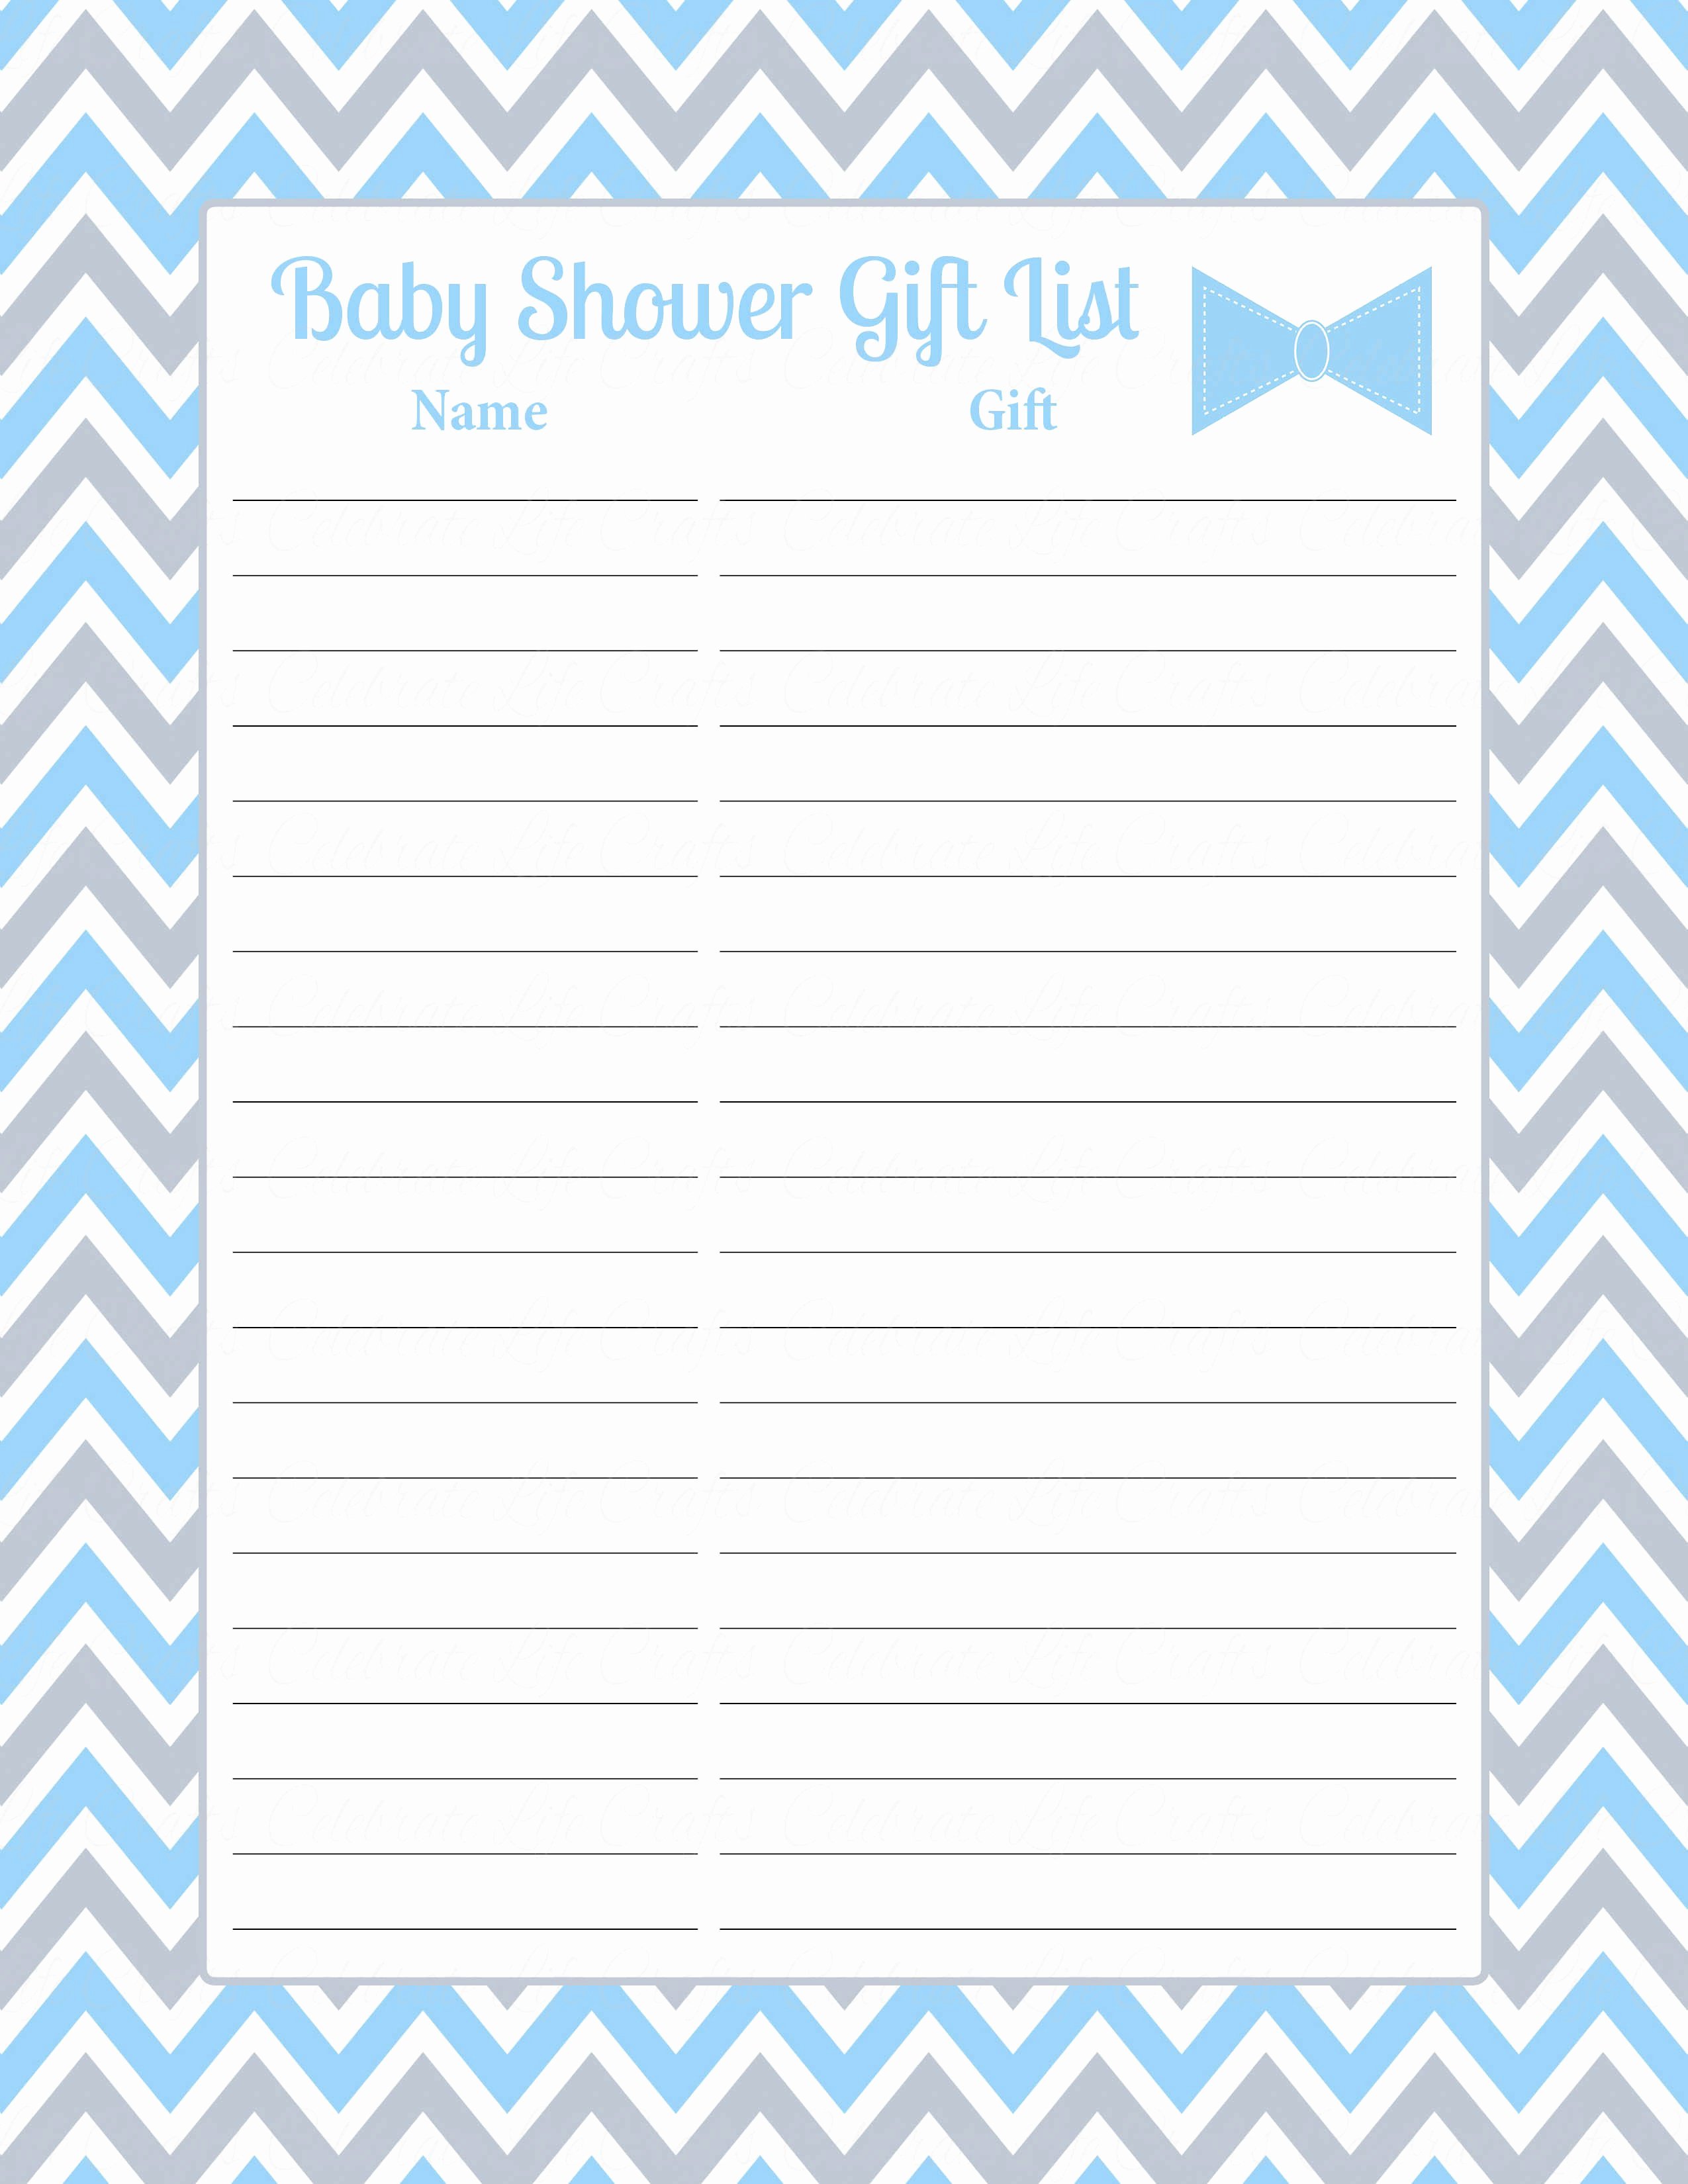 Baby Shower Gift Lists Fresh Baby Shower Gift List Little Man Baby Shower theme for